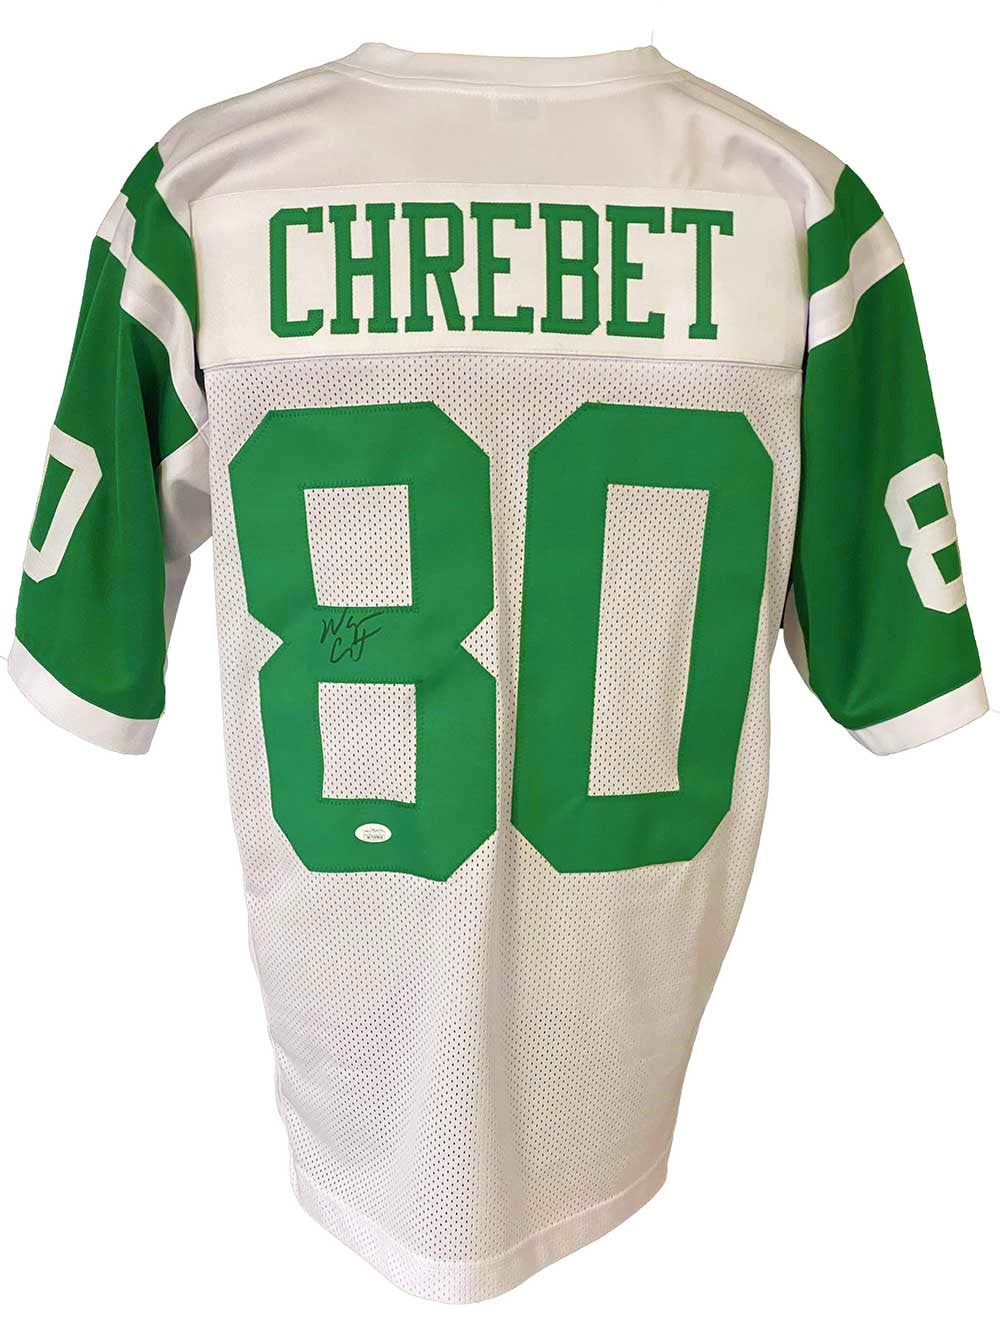 Wayne Chrebet New York Jets Autographed White Football Jersey - Dynasty Sports & Framing 